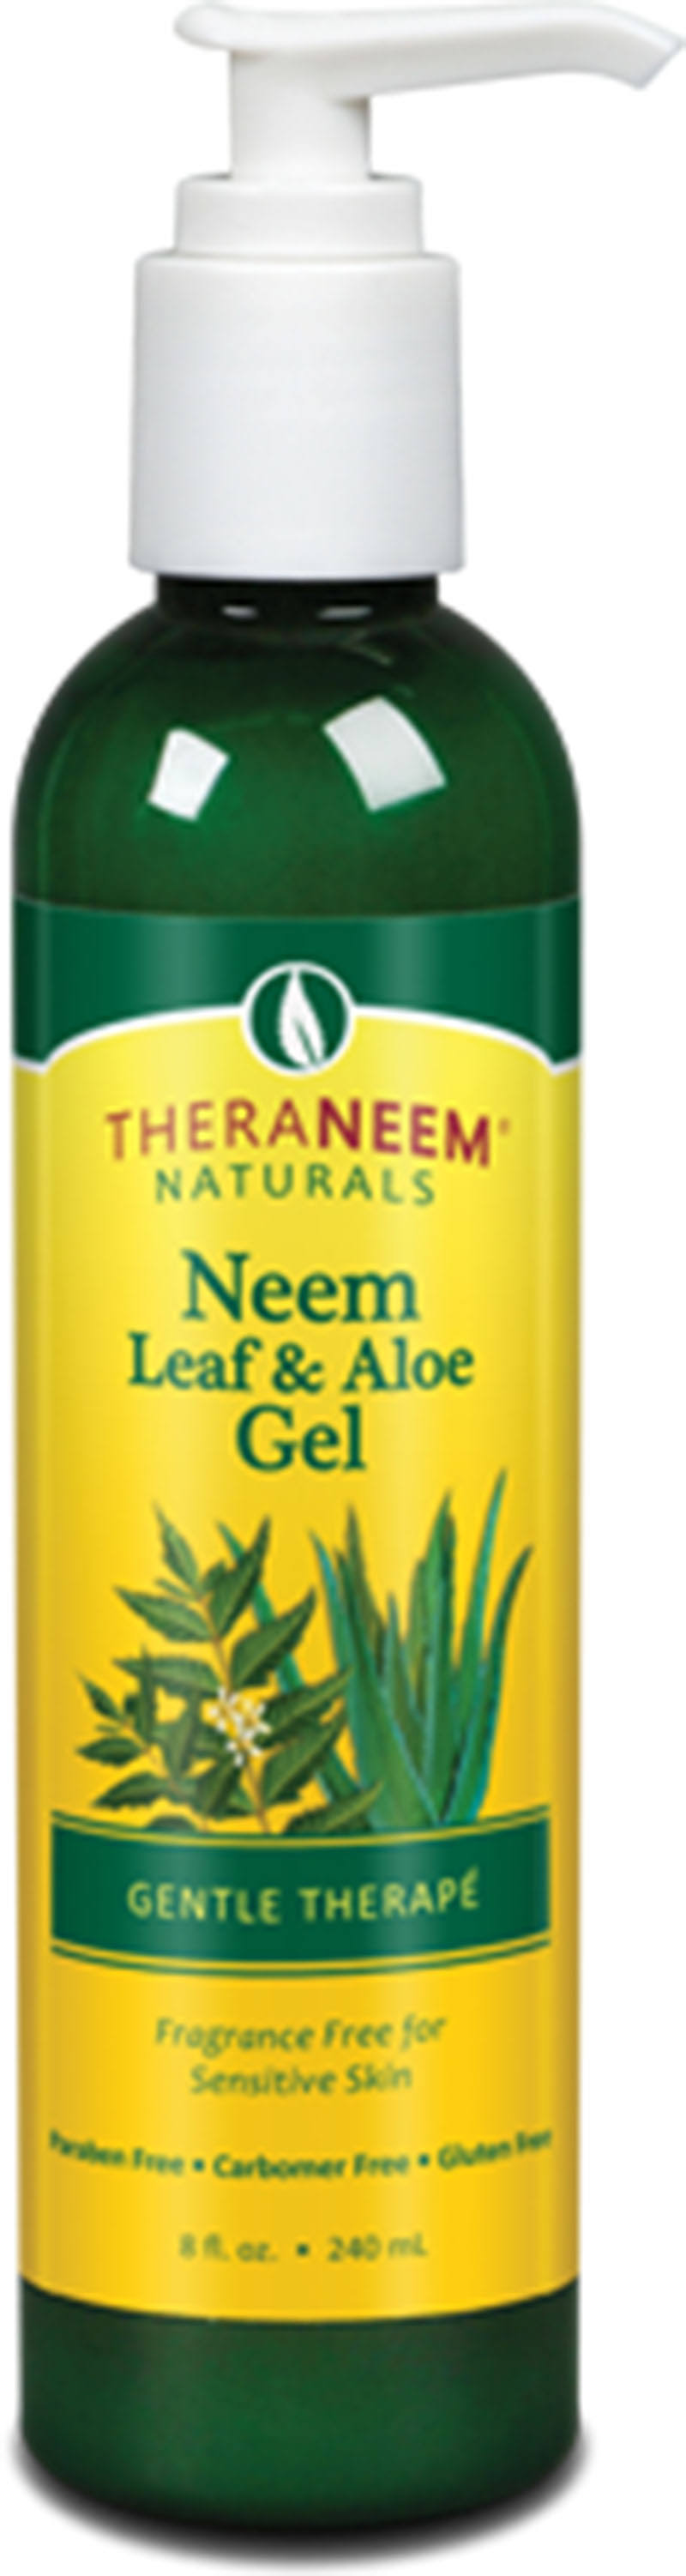 TheraNeem Organix Neem Leaf & Aloe Gel - 8 oz